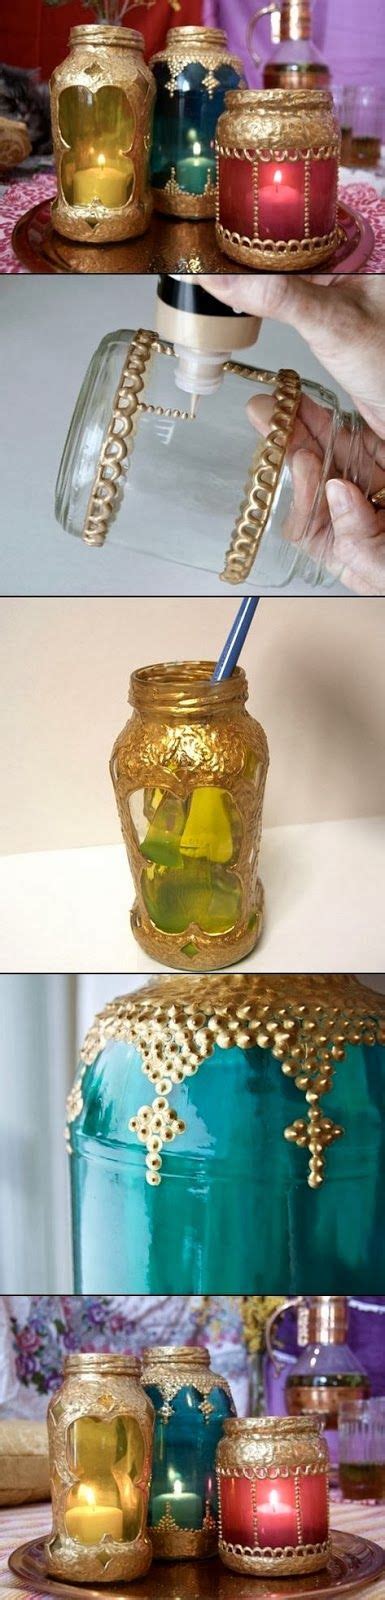 Home Decorating Ideas On A Budget Diy Projectglass Jar